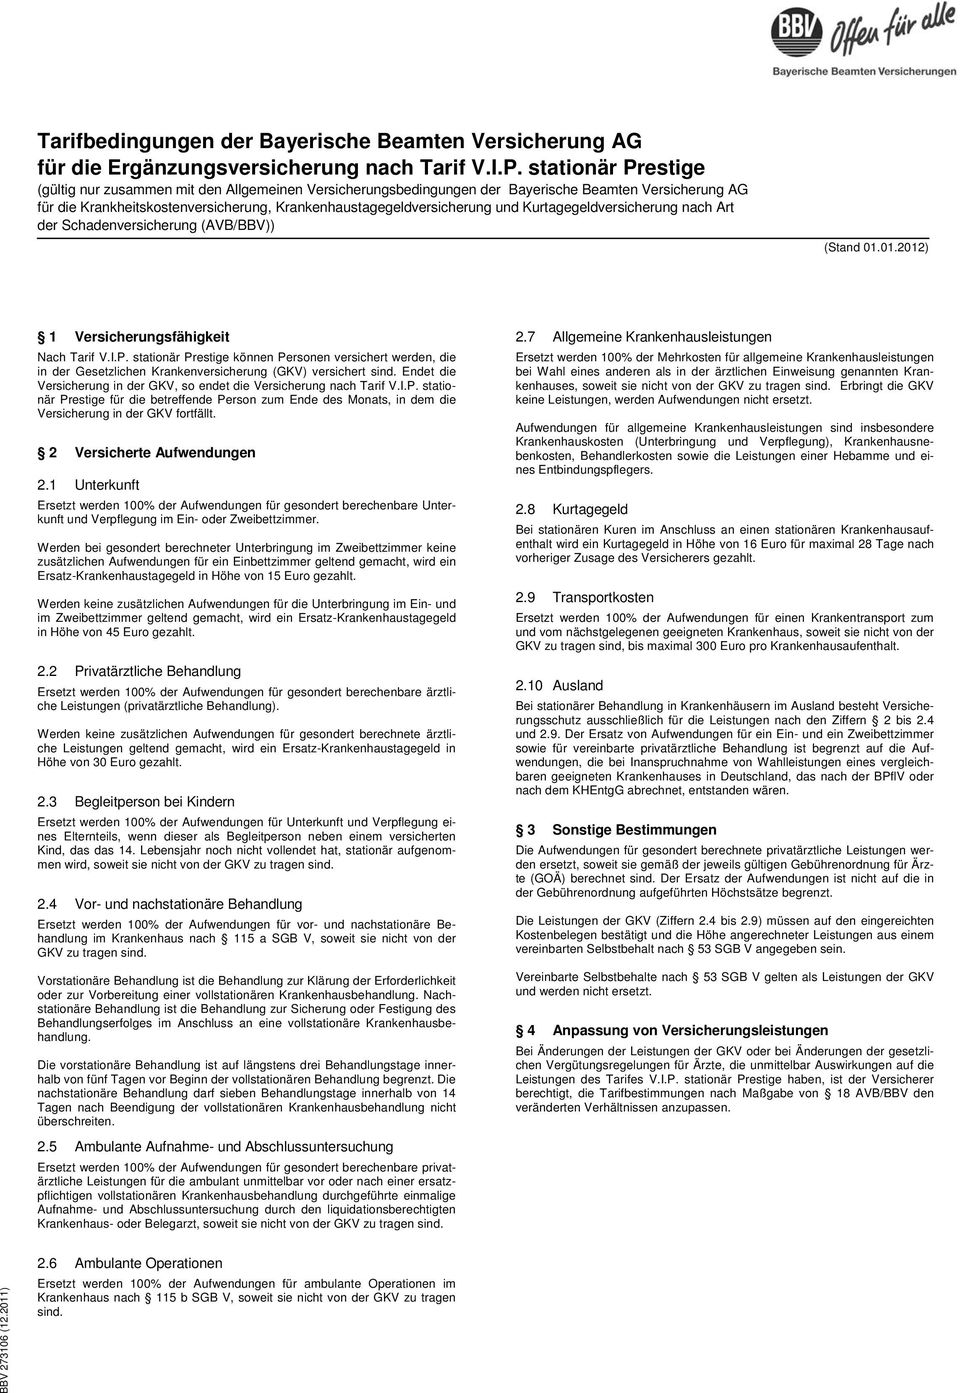 Kurtagegeldversicherung nach Art der Schadenversicherung (AVB/BBV)) (Stand 01.01.2012) 1 Versicherungsfähigkeit Nach Tarif V.I.P.